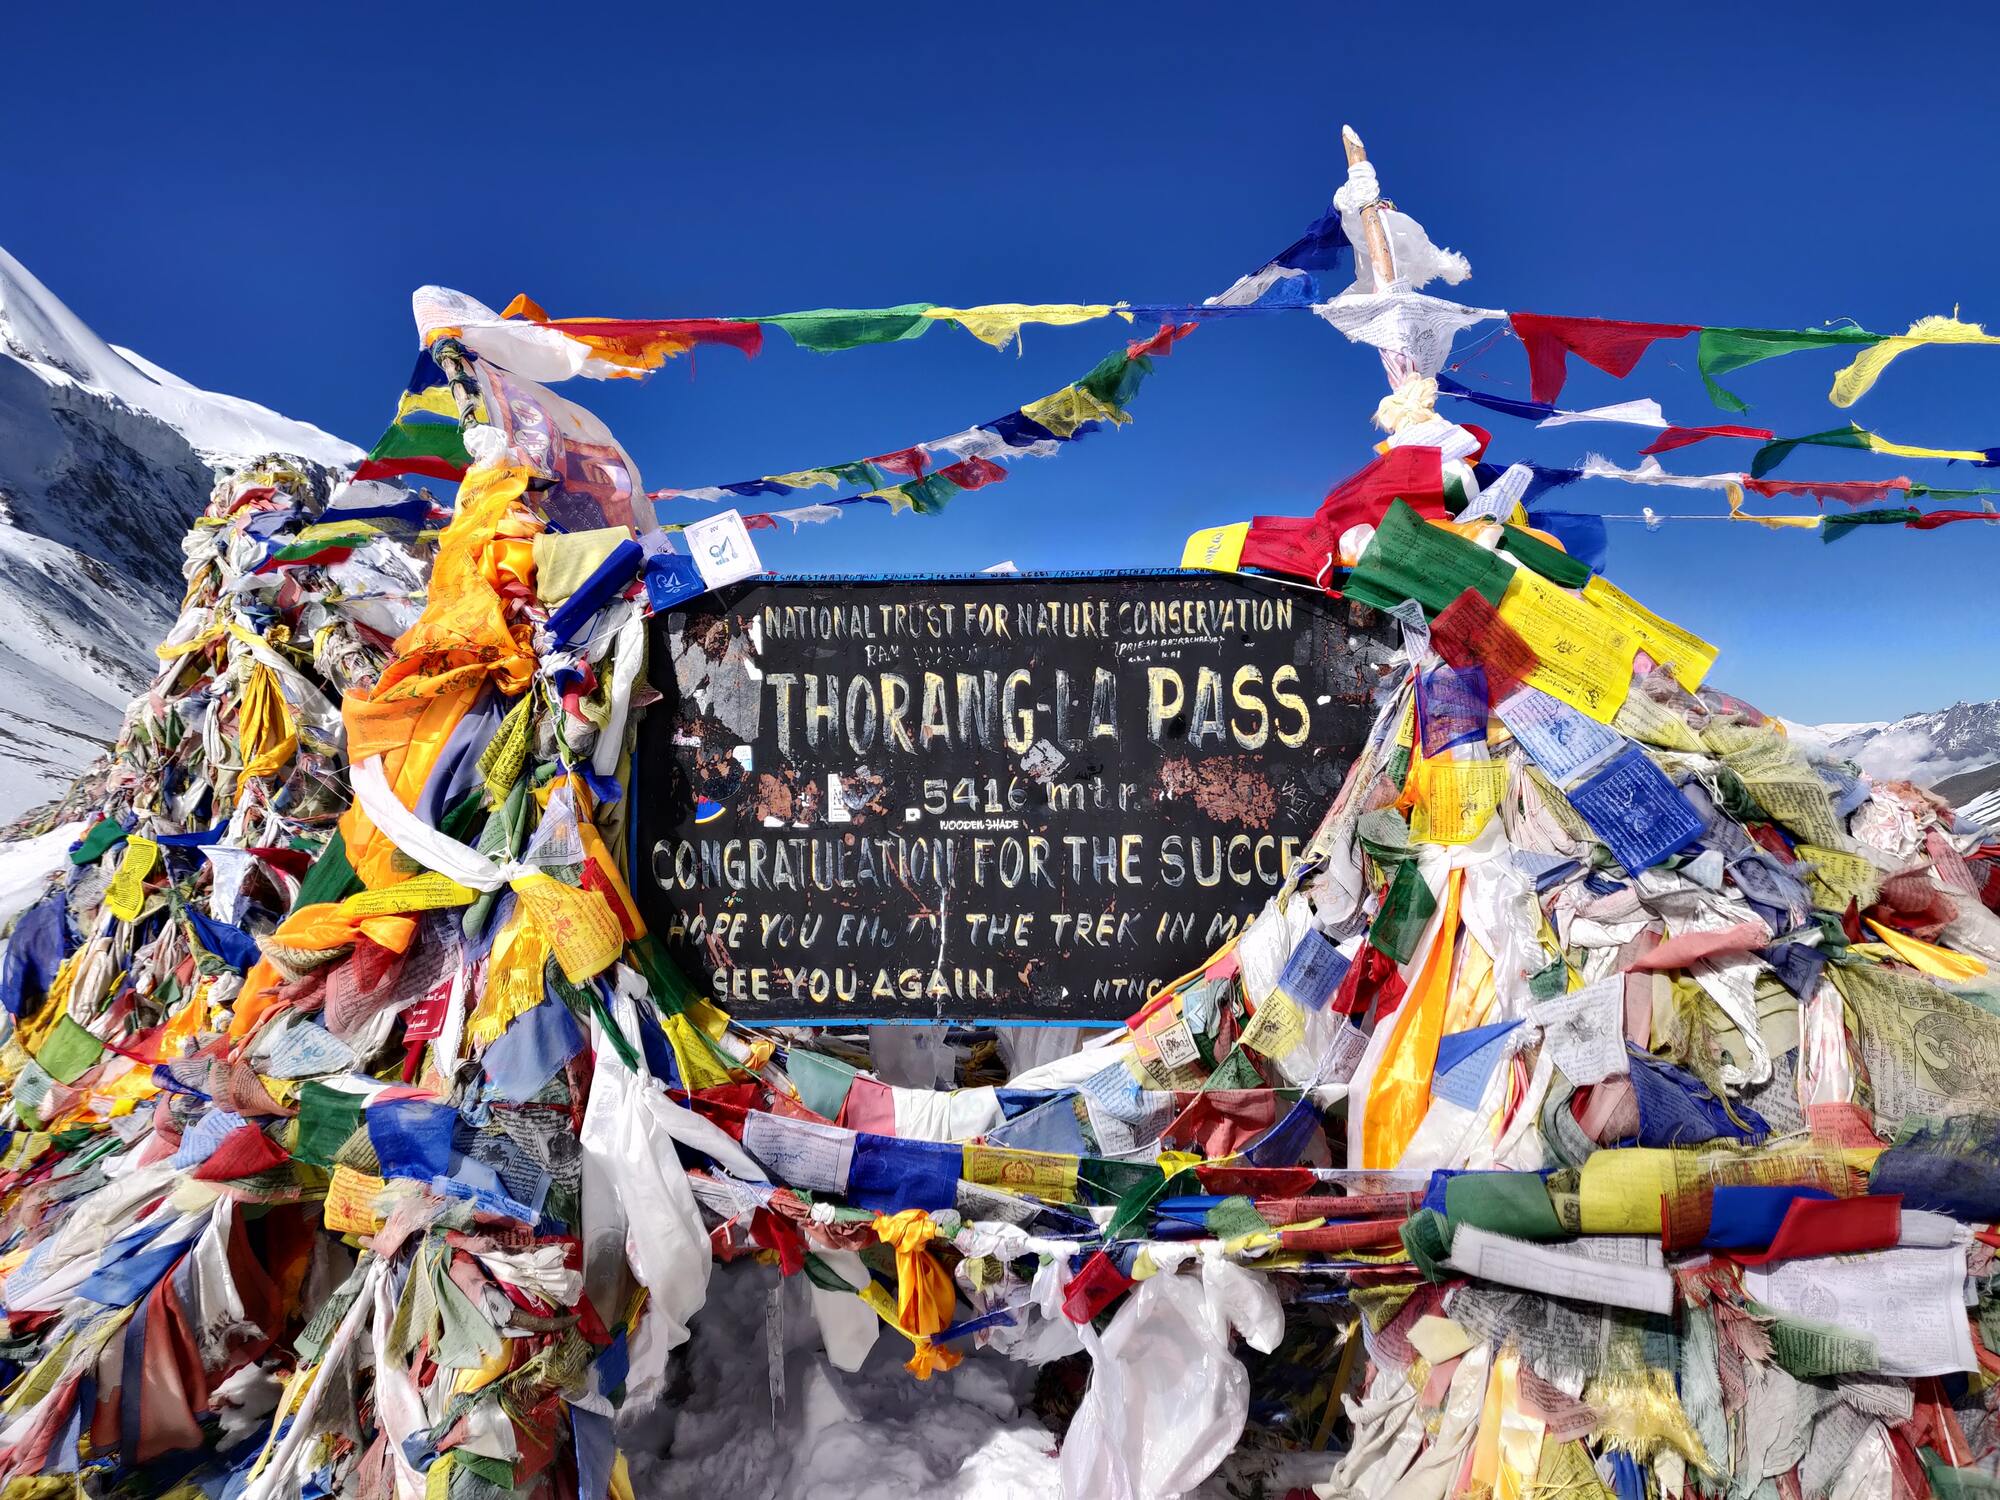 Annapurna Circuit Trek via Thorong La pass in Nepal - By Mountain People authentic treks & hikes in Nepal